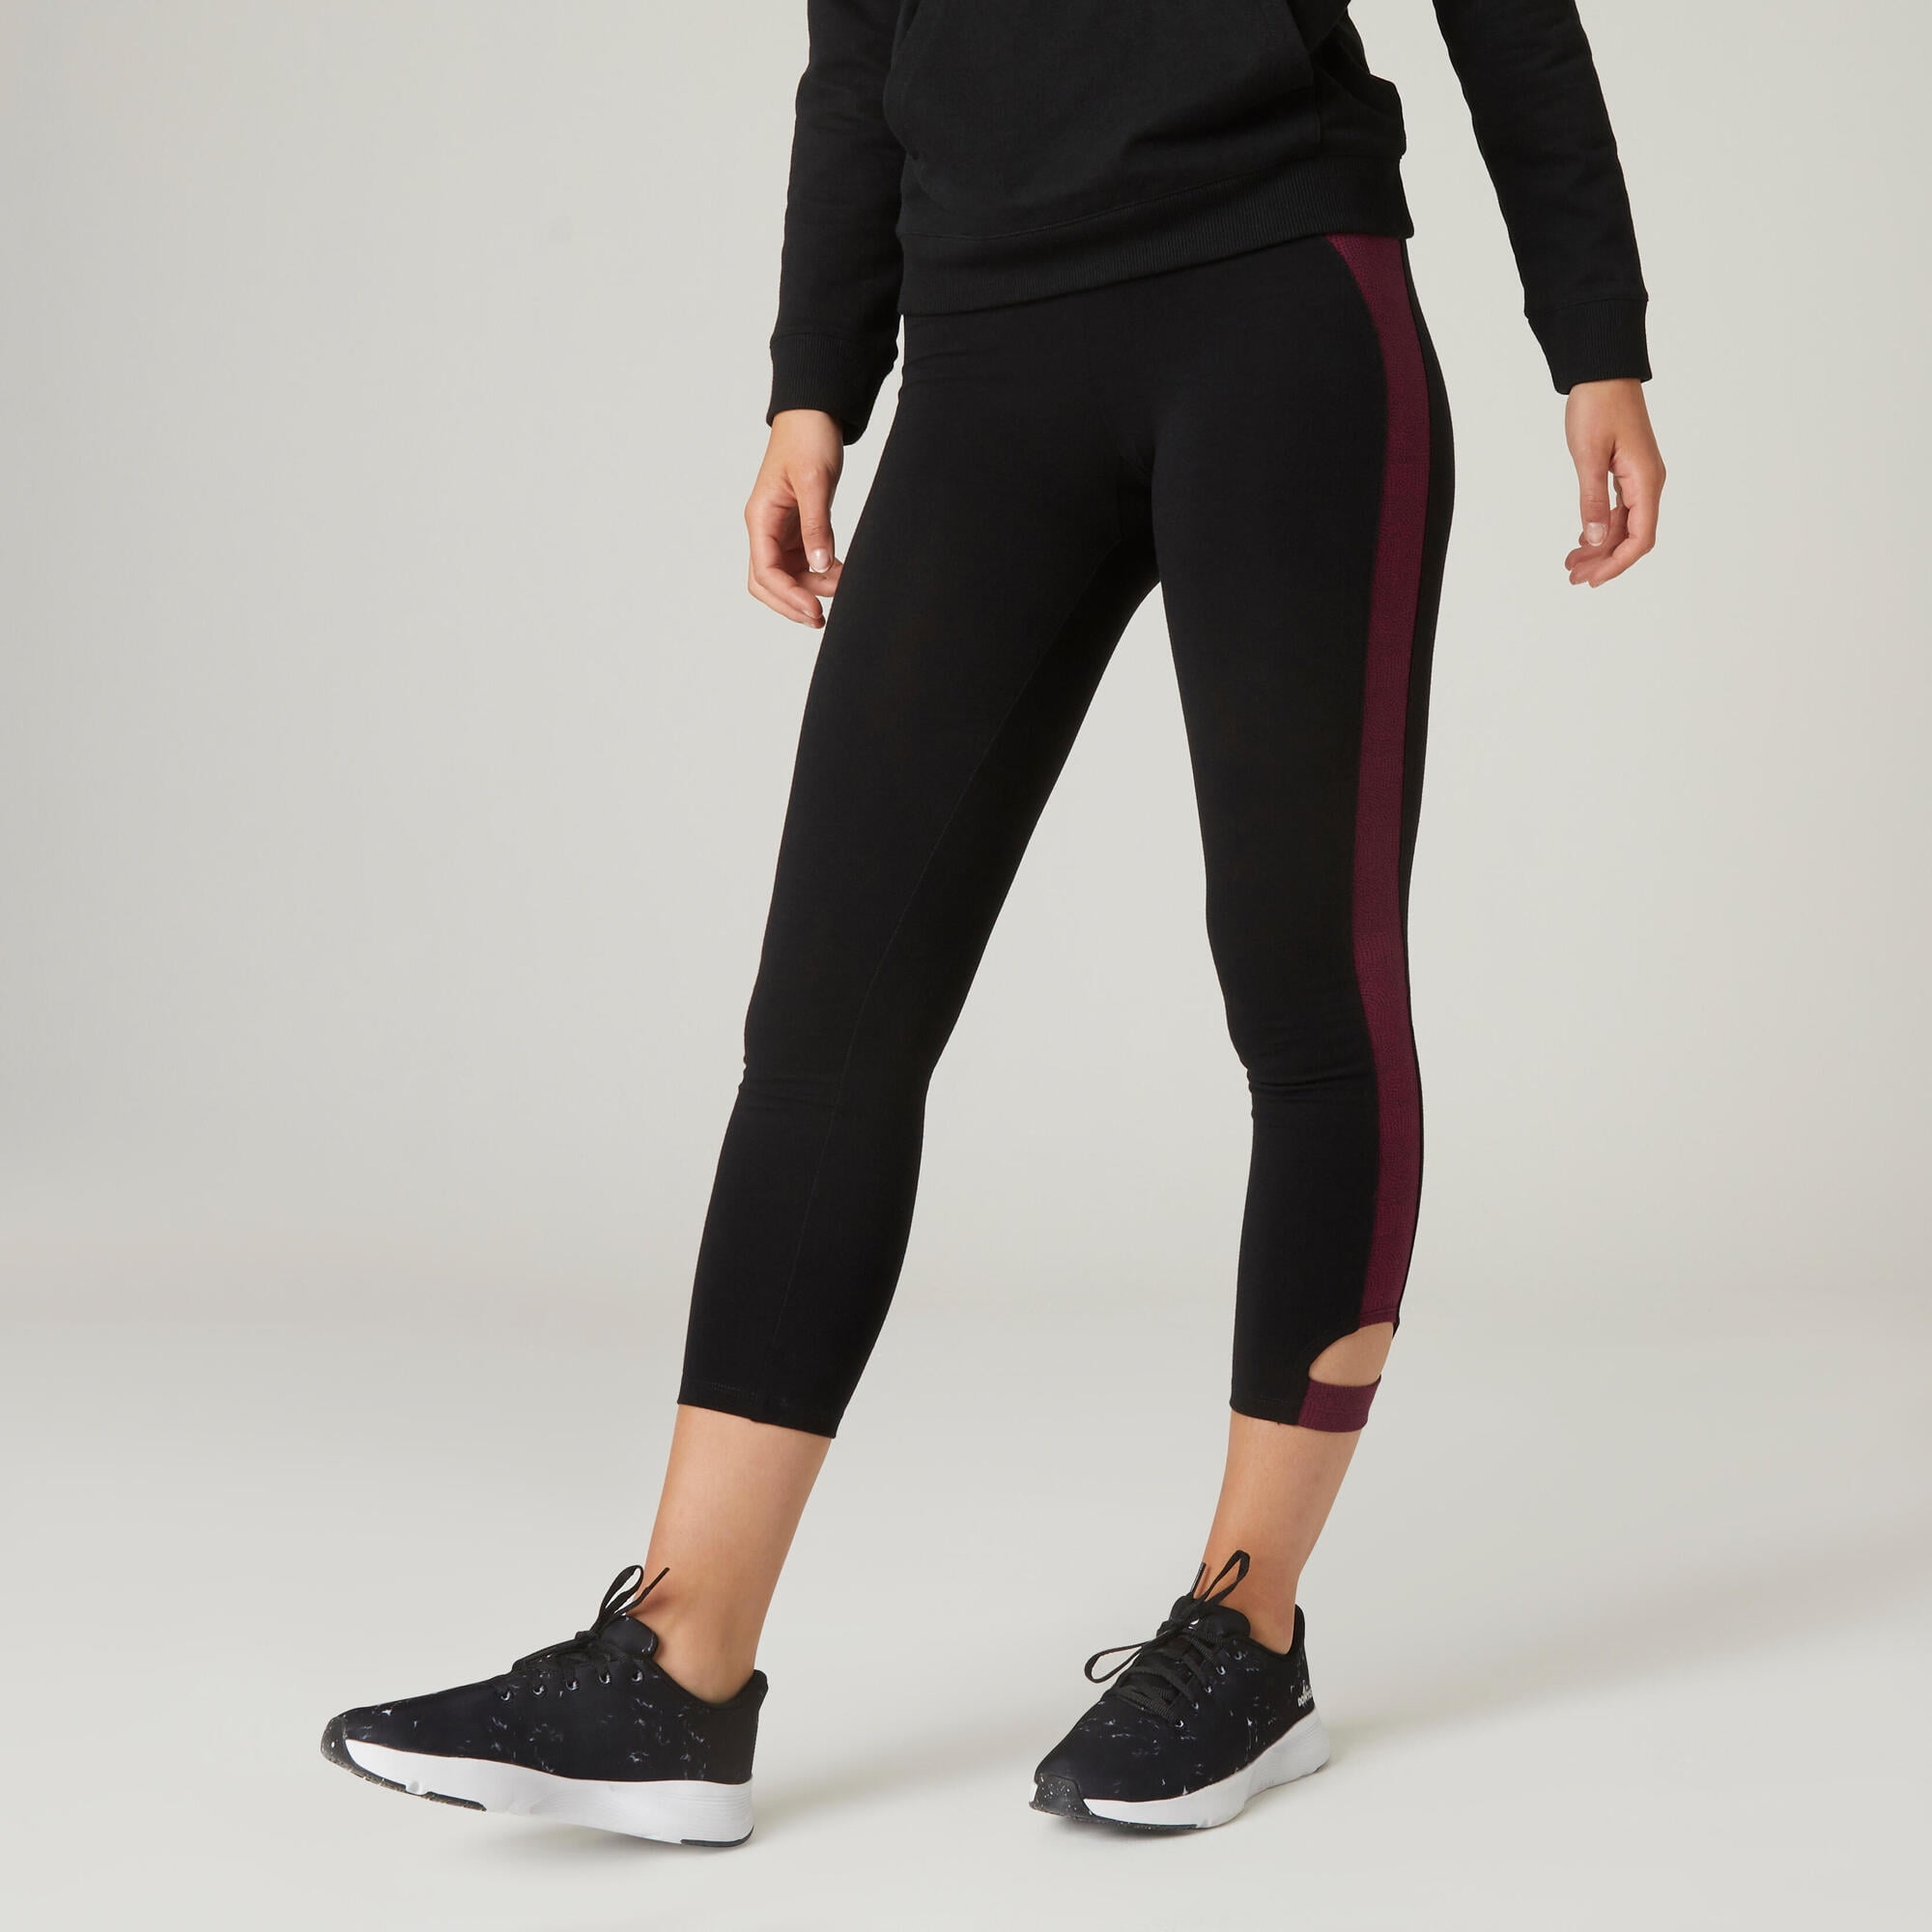 Decathlon - Domyos 7/8 Stretchy Cotton Fitness Leggings, Women's - Walmart.com